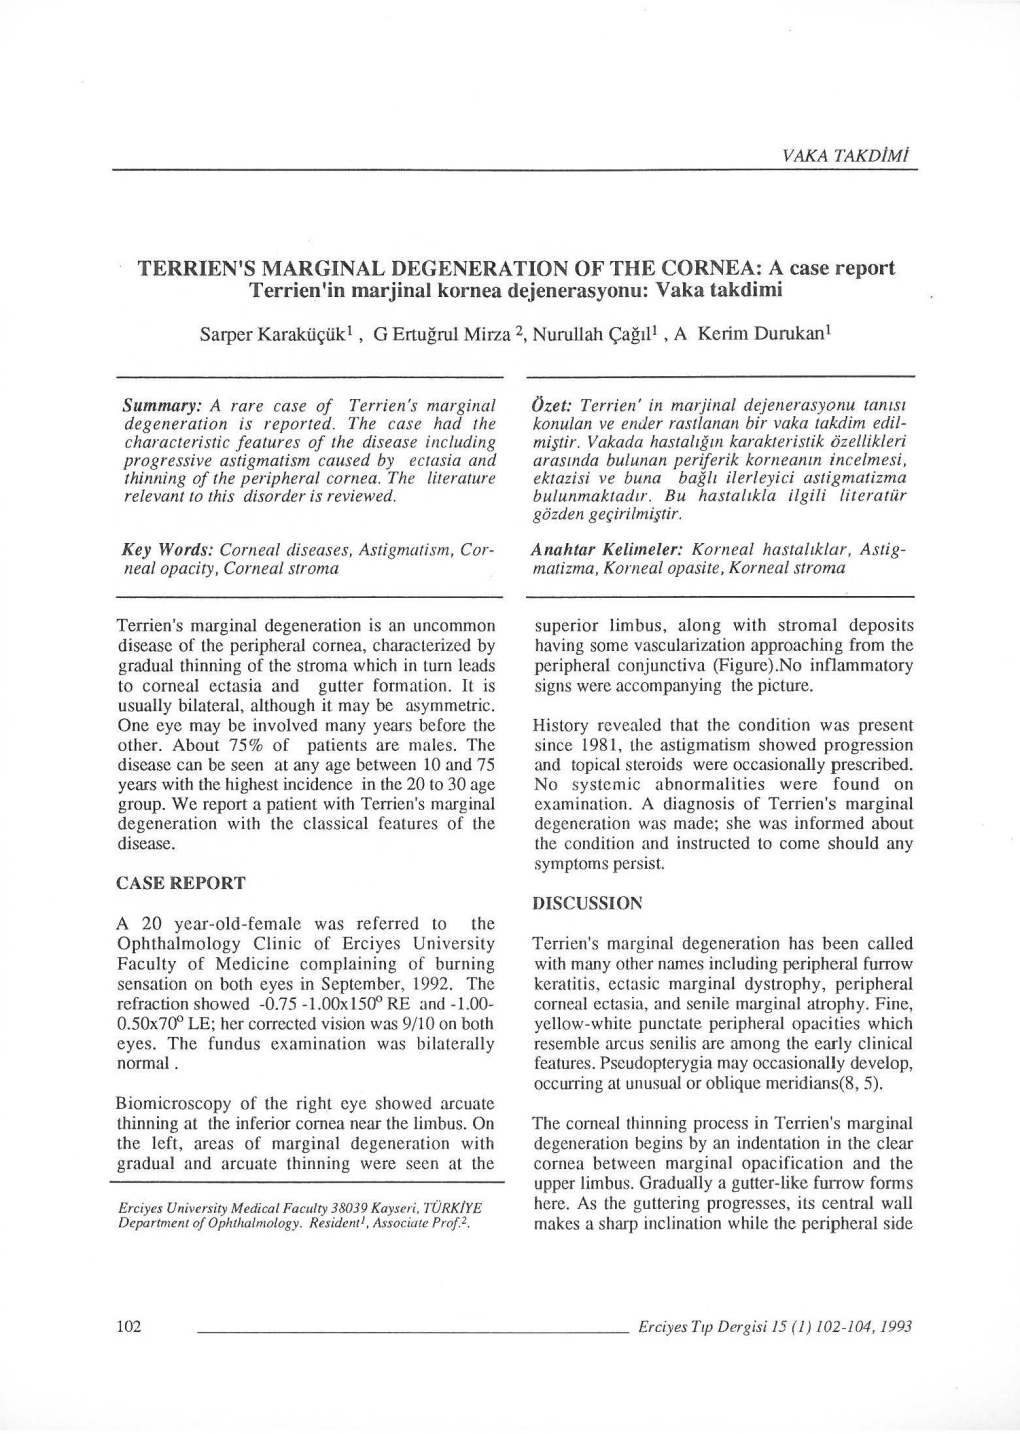 TERRIEN's MARGINAL DEGENERATION of the CORNEA: a Case Report Terrien'in Marjinal Kornea Dejenerasyonu: Vaka Takdimi